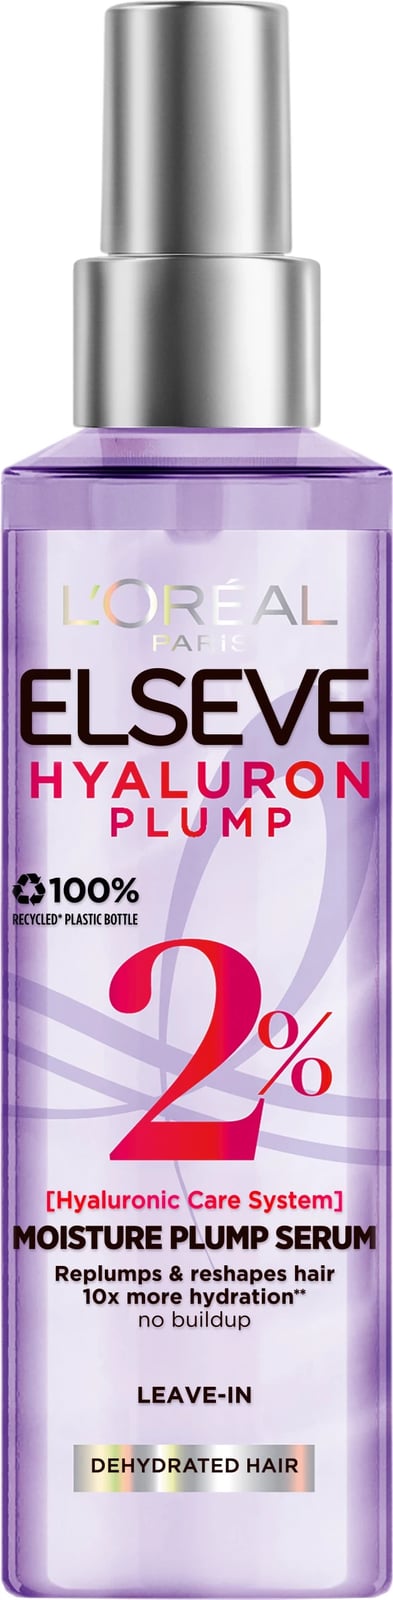 Sprej për flokë Elseve Hyaluron Plump, 200 ml  